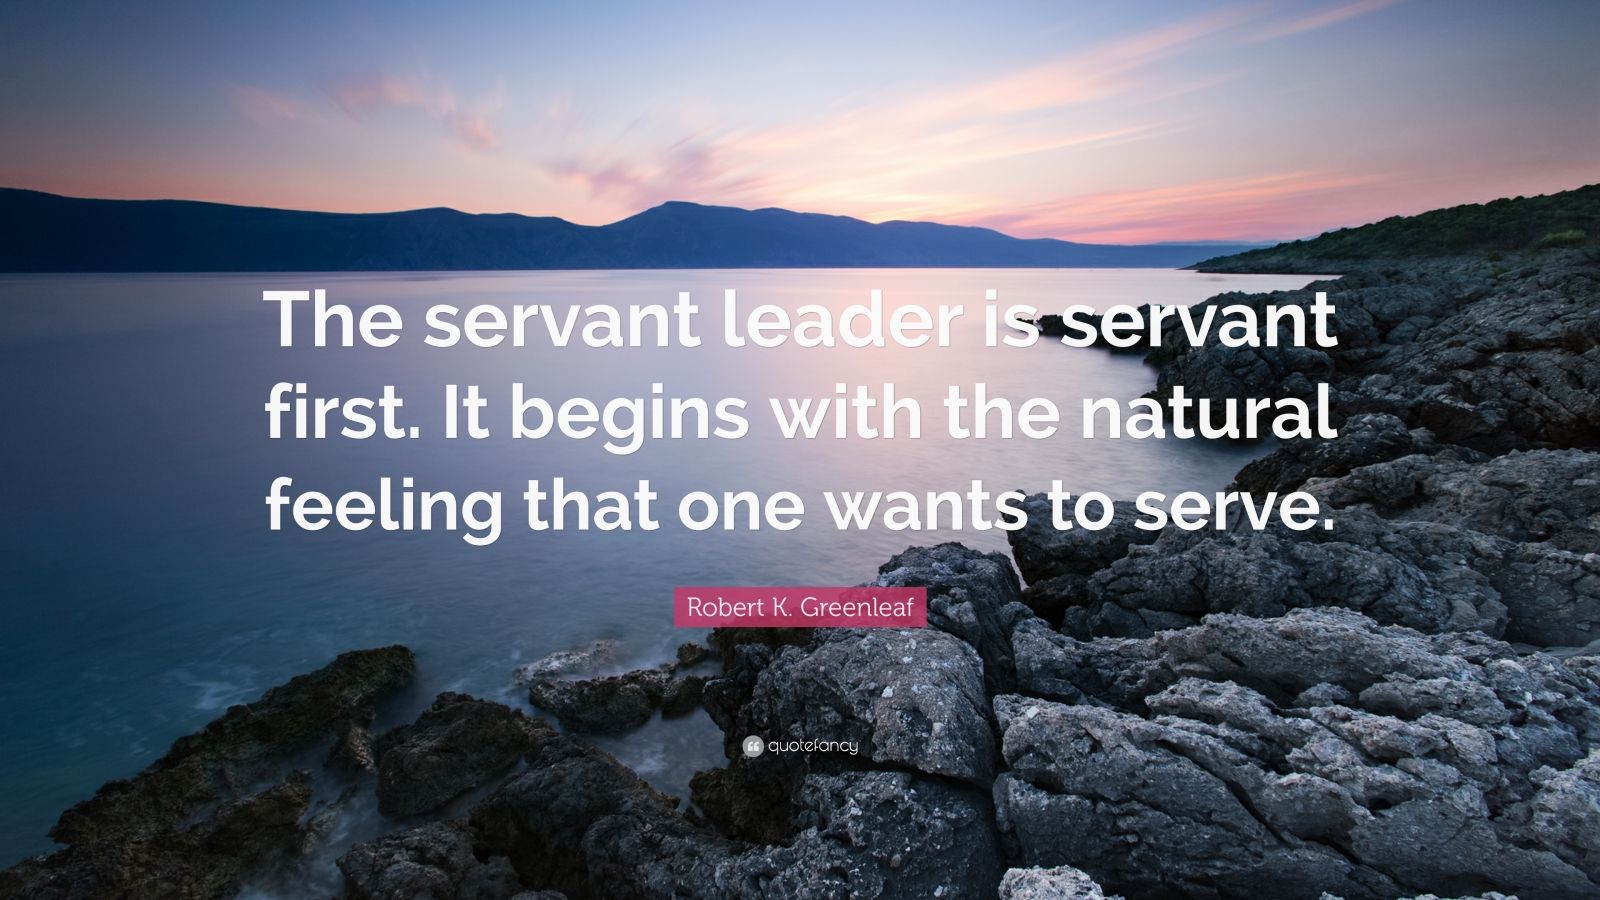 Robert K. Greenleaf Quote “The servant leader is servant